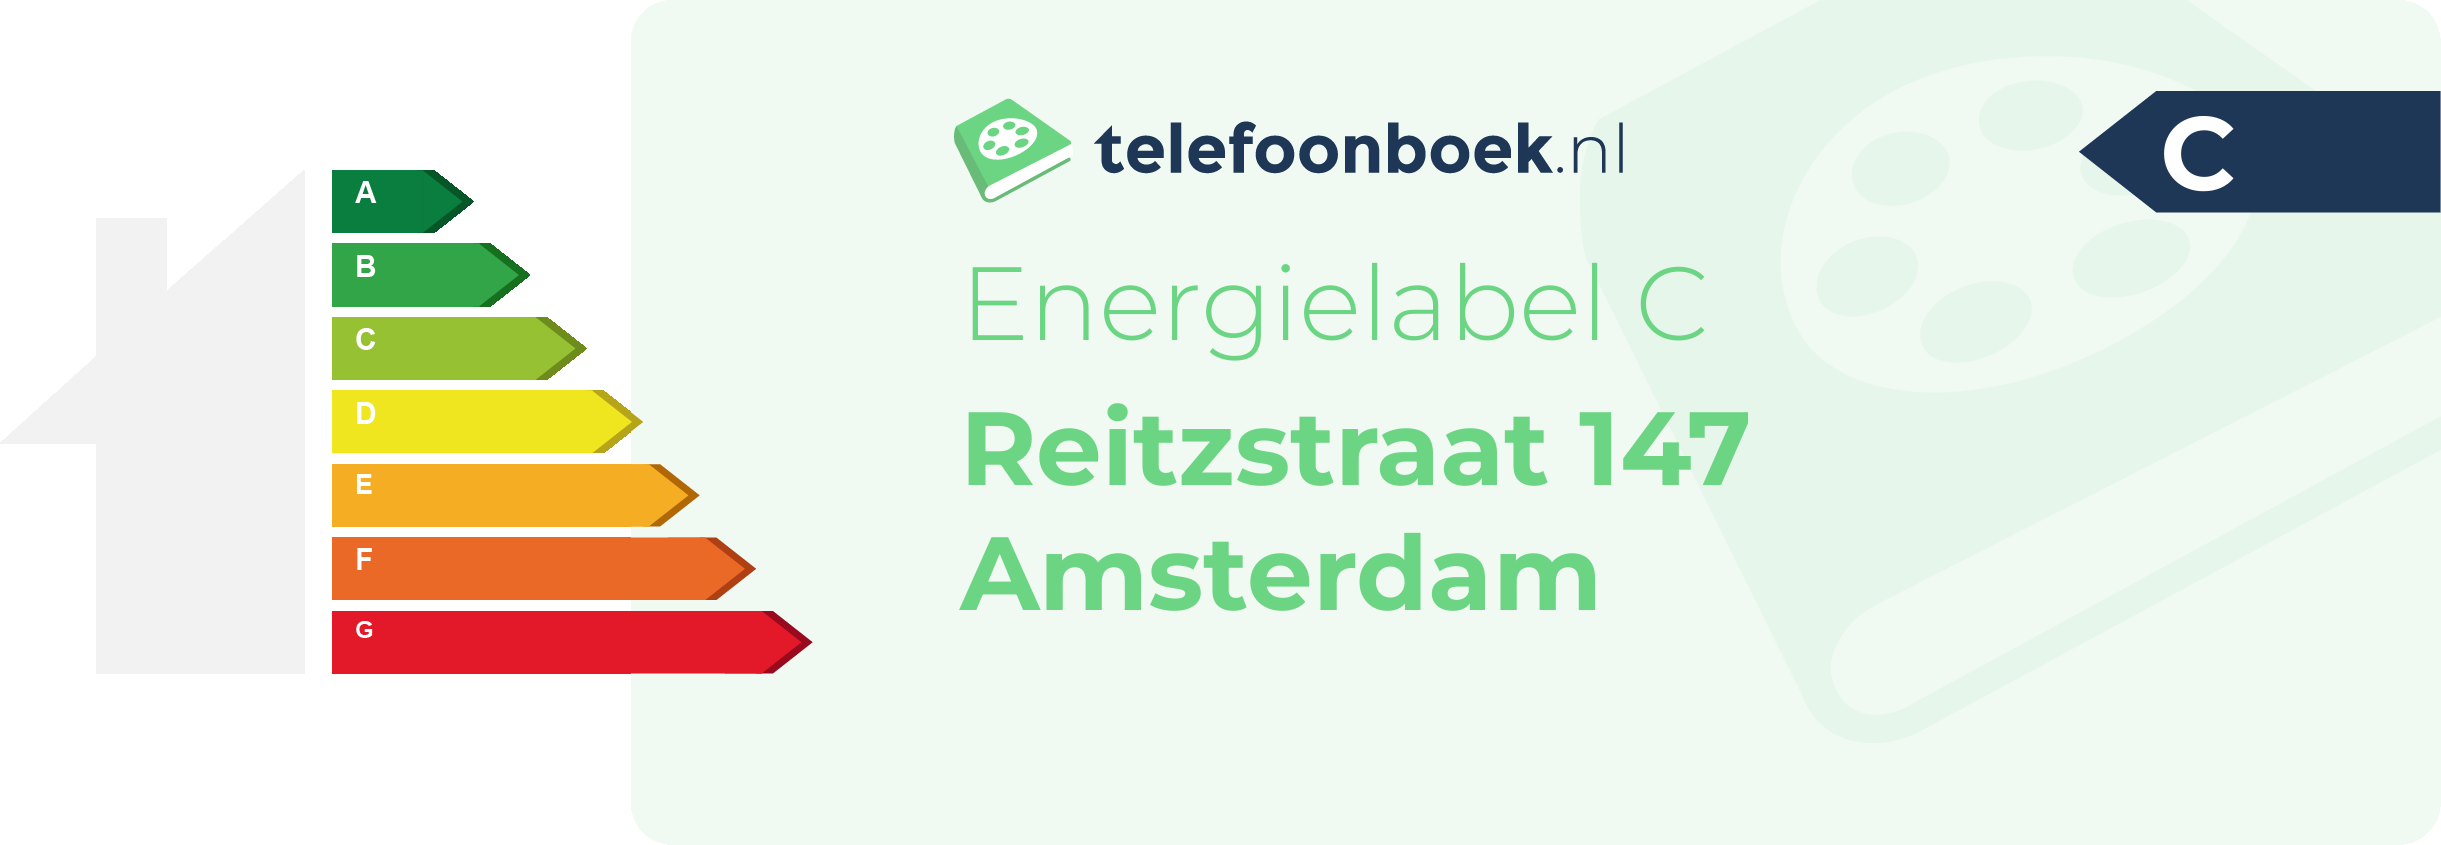 Energielabel Reitzstraat 147 Amsterdam